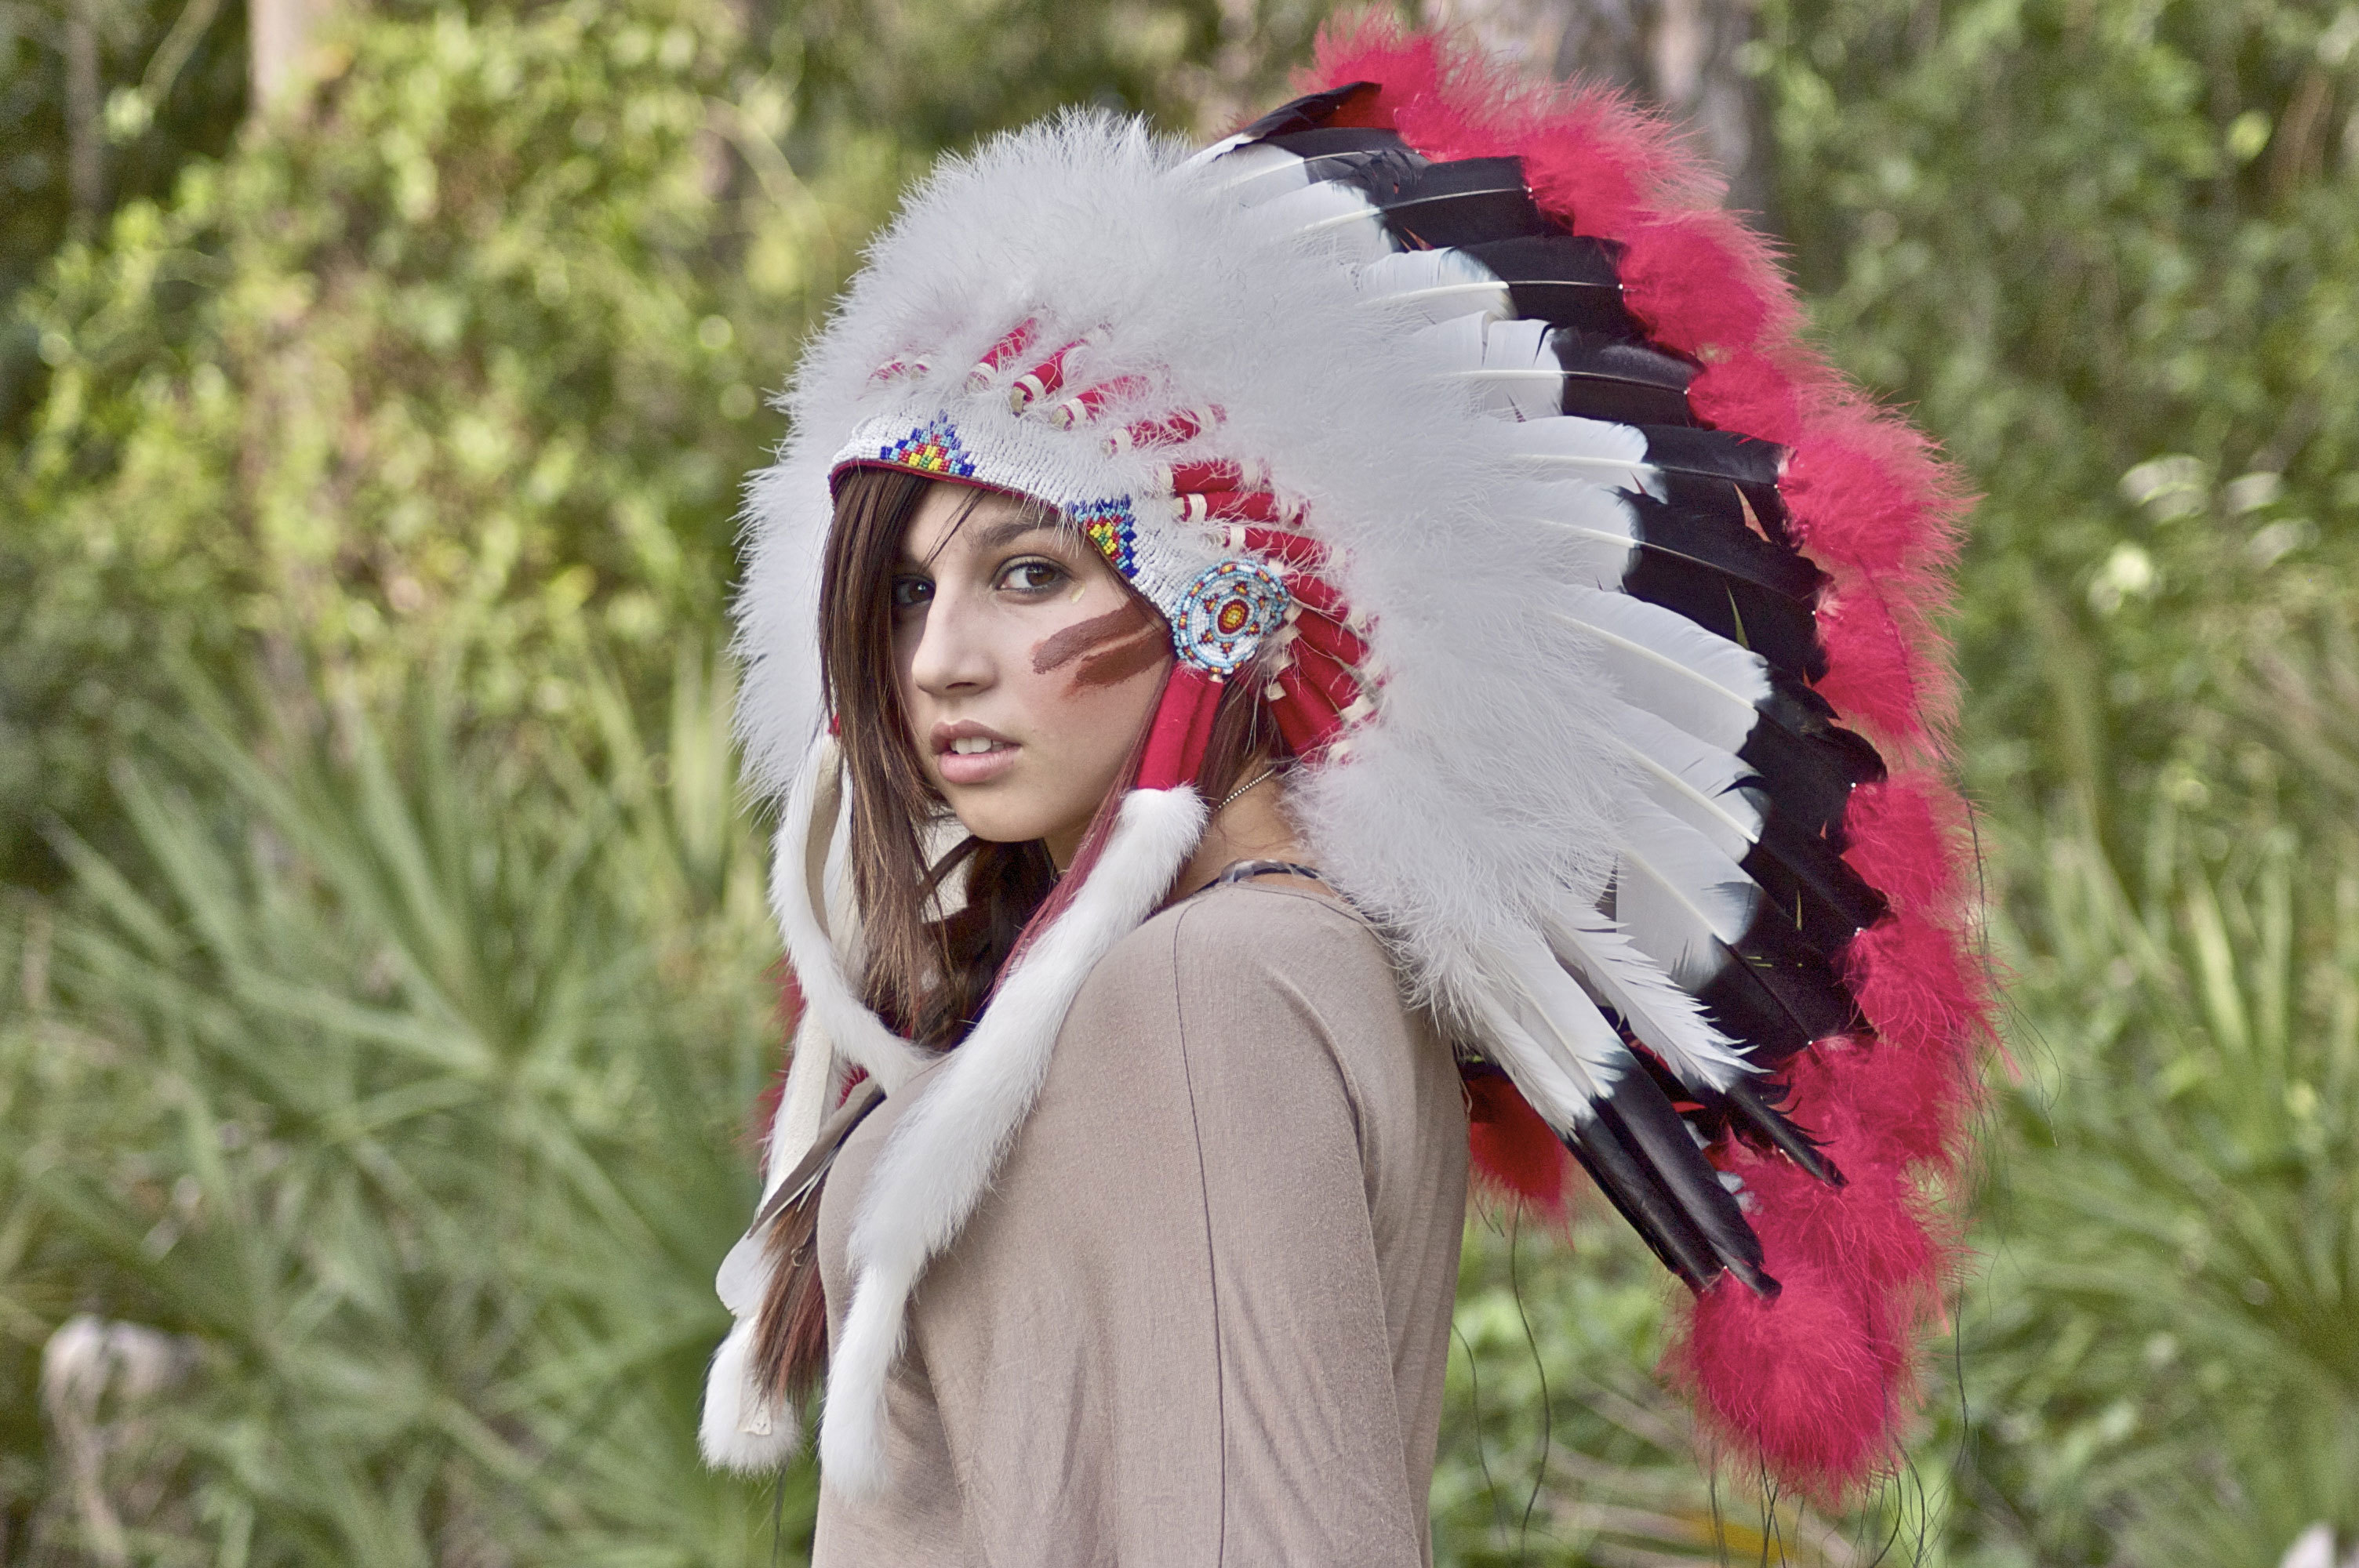 Фото индейца с перьями на голове